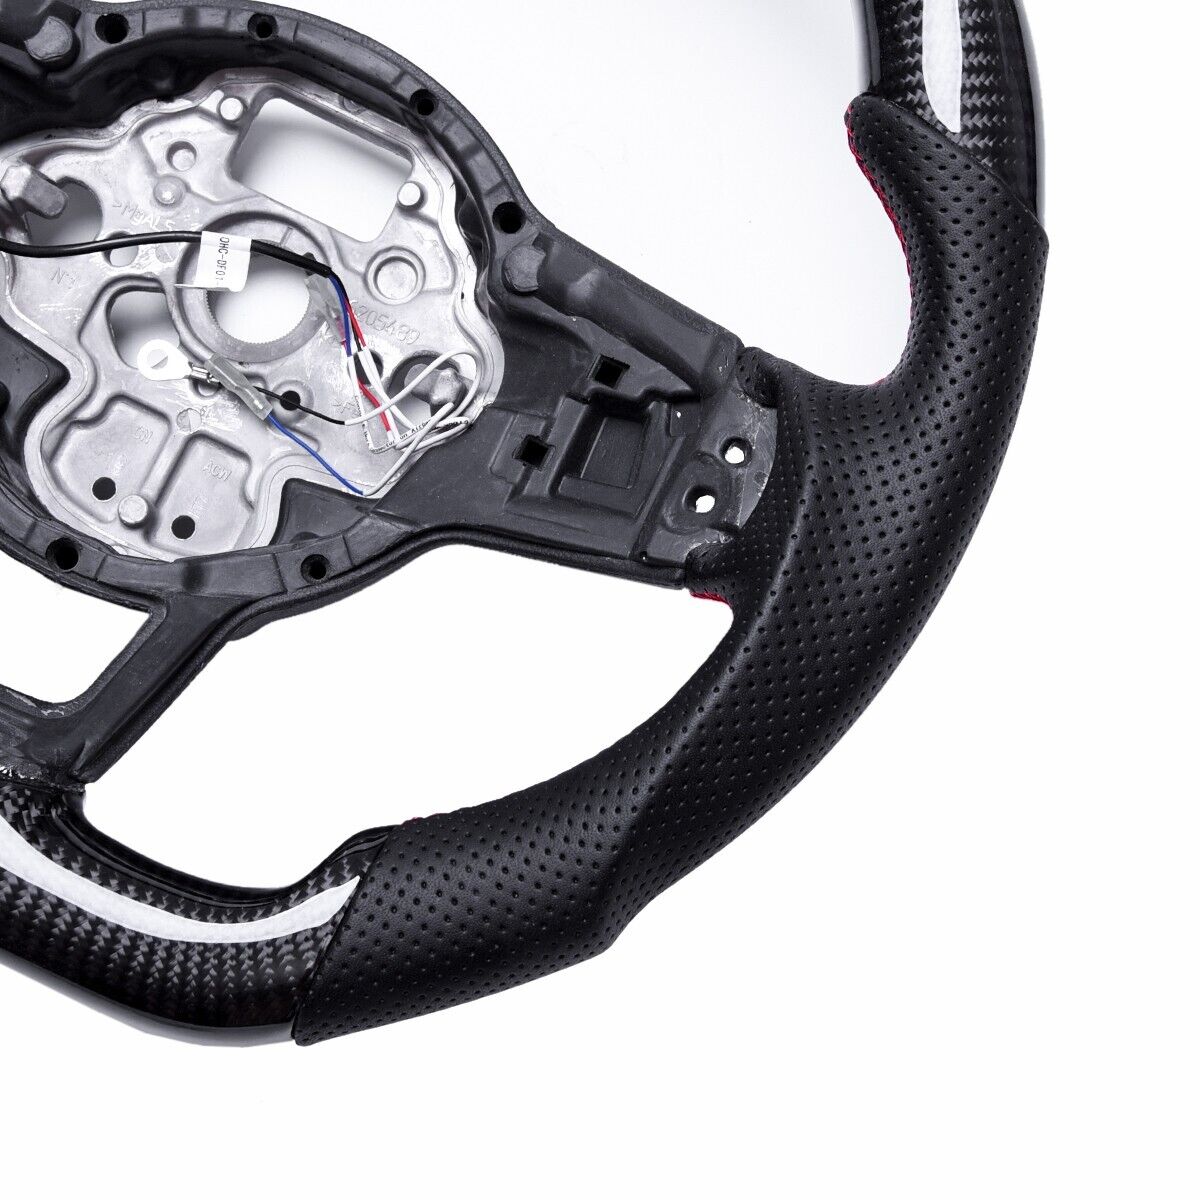 Revolve Carbon Fiber OEM LED Steering Wheel Volkswagen Golf 7 GTI R 2015-2017 - revolvesteering